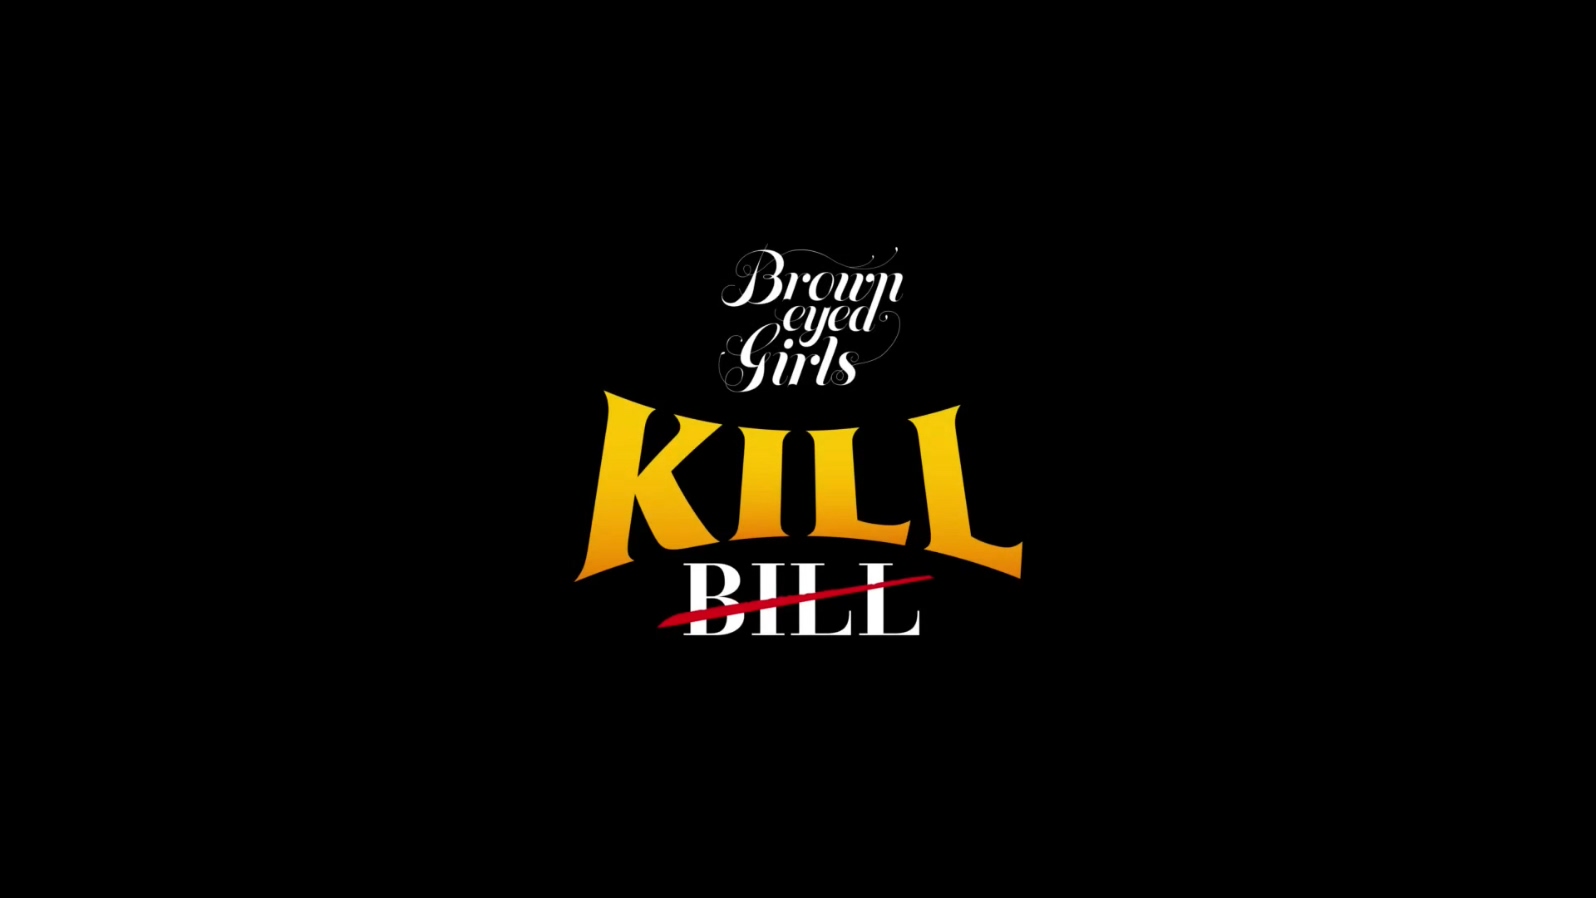 Brown Eyed Girls - Kill Bill (Dan